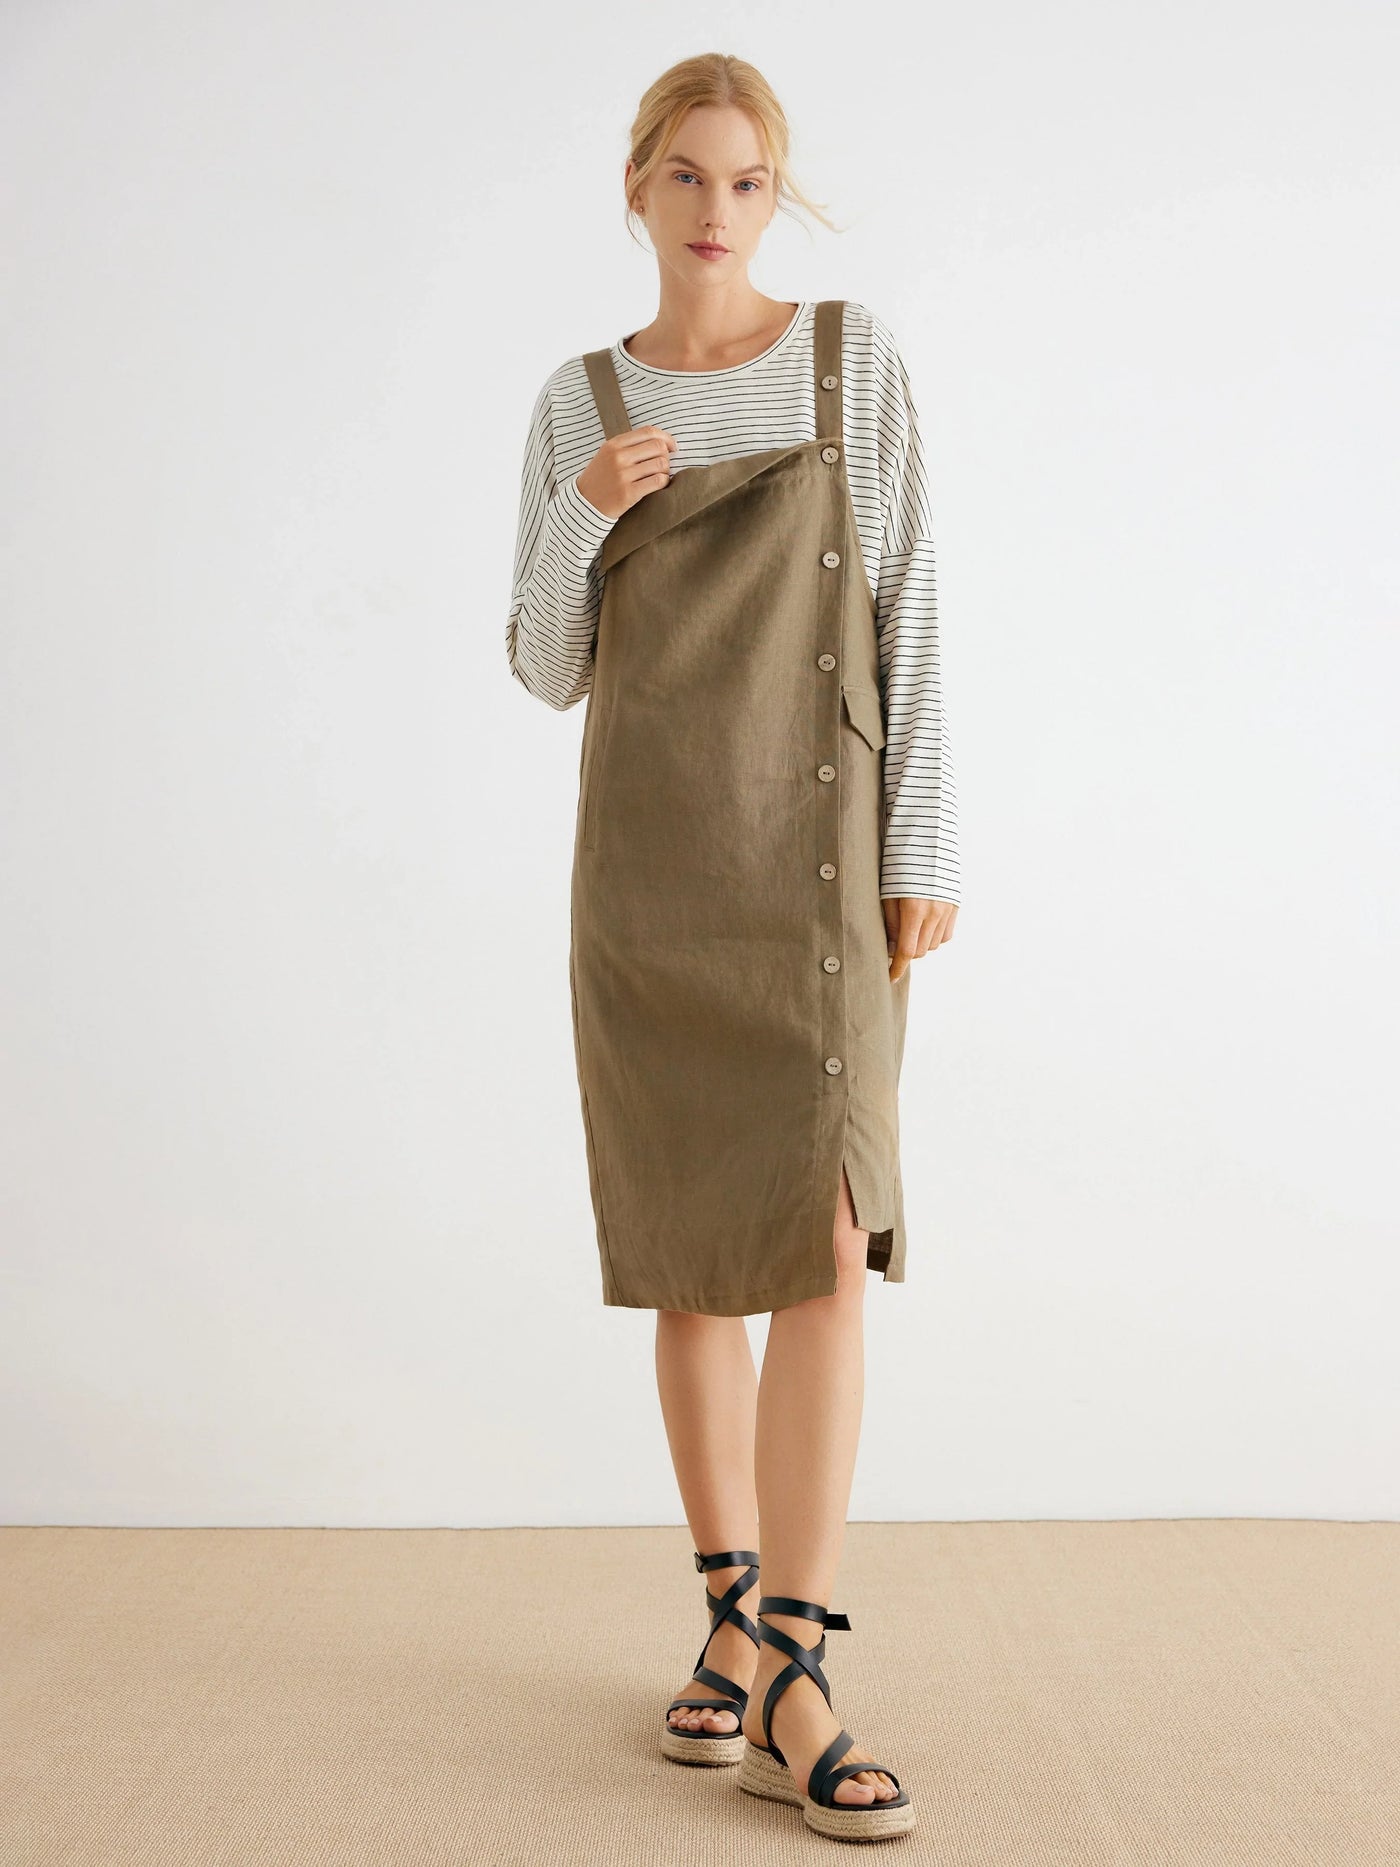 Milly 100% Linen Asymmetrical Buttons Slouchy Overall Dress